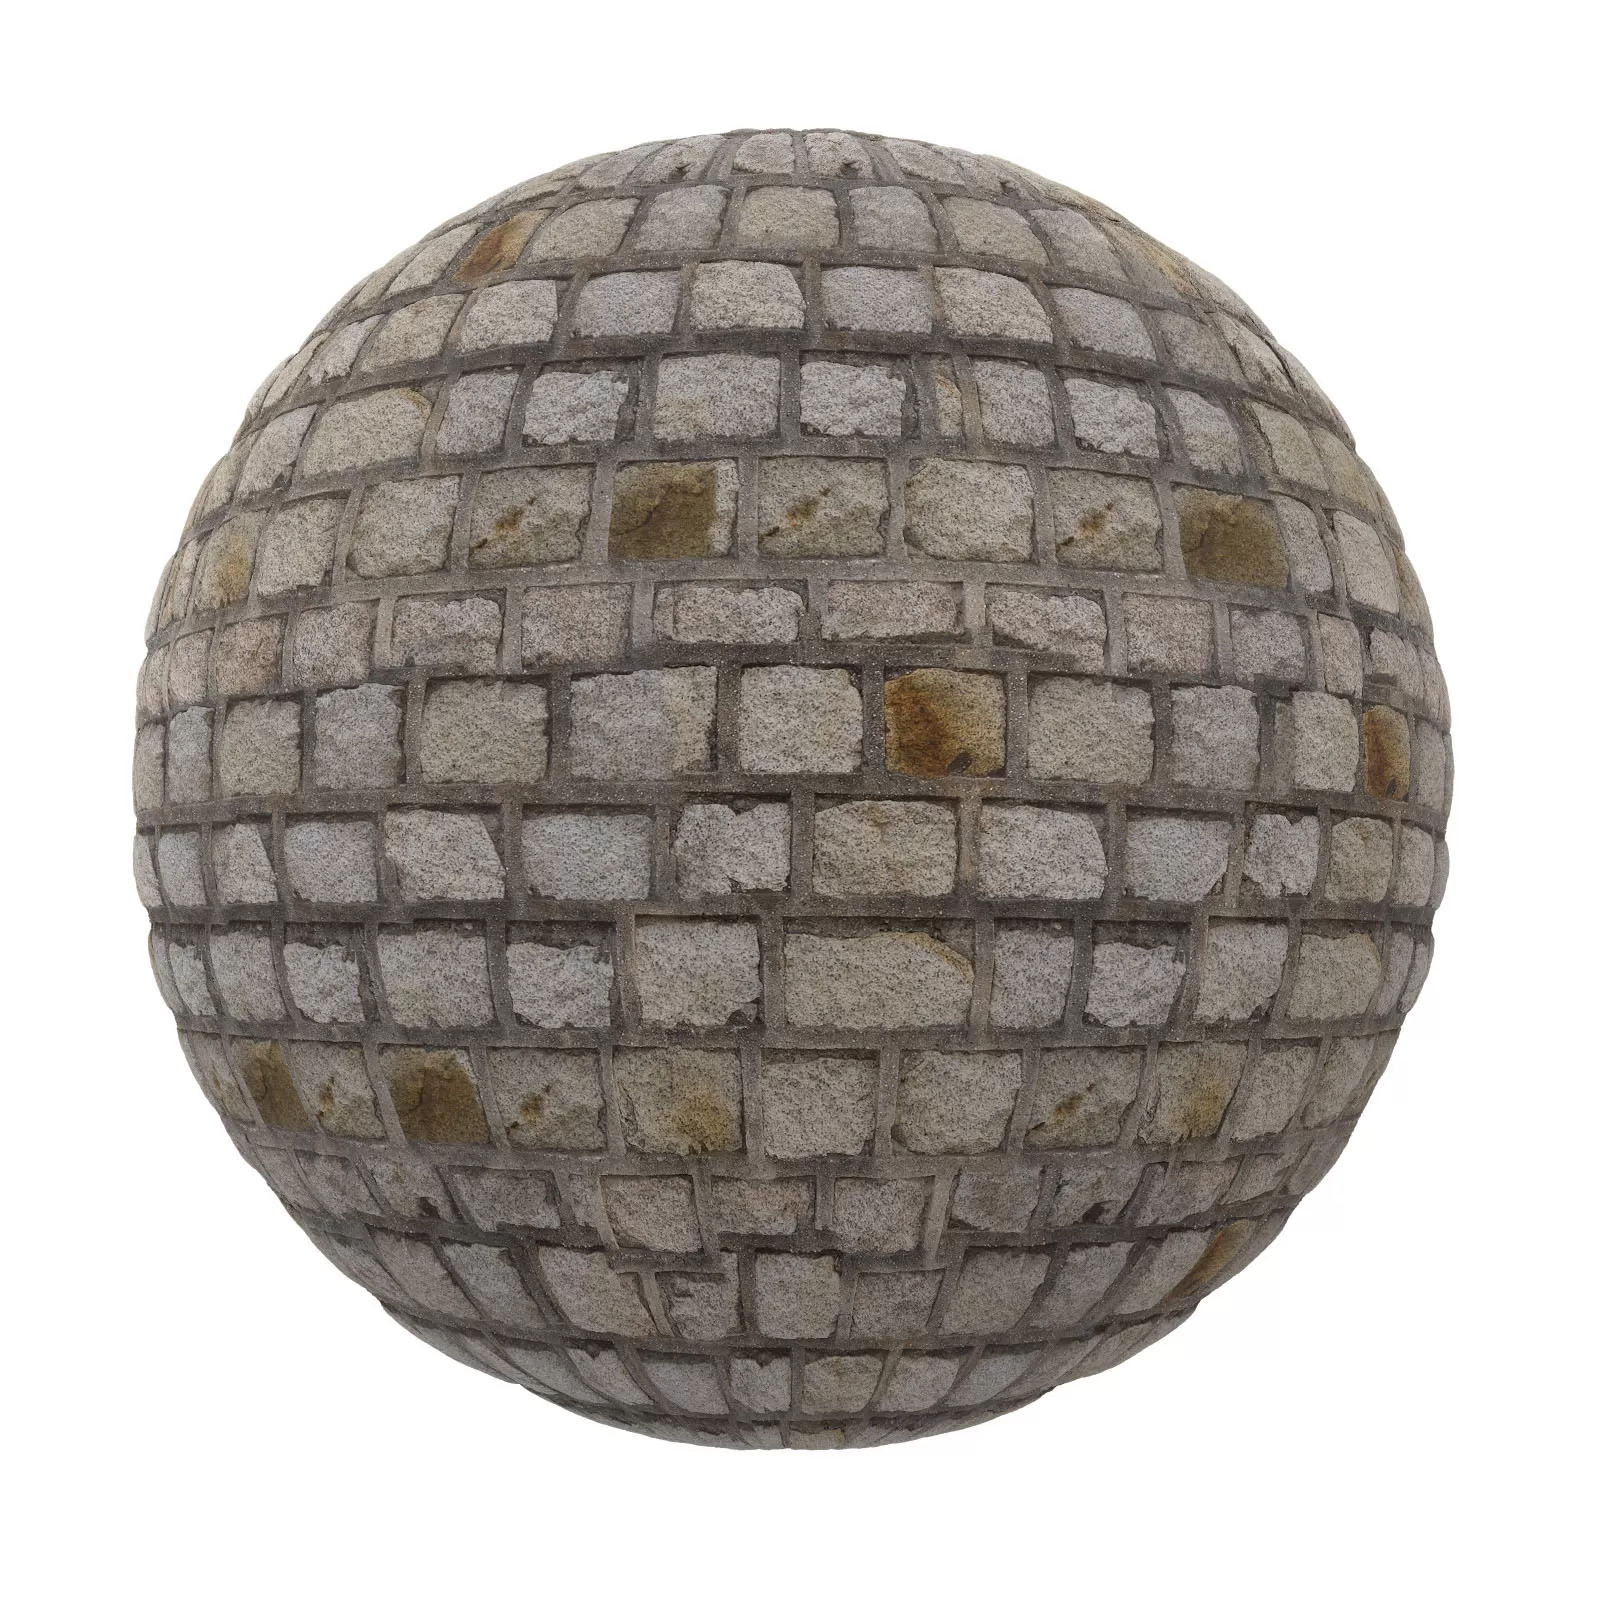 PBR CGAXIS TEXTURES – PAVEMENTS – Stone Brick Pavement 4